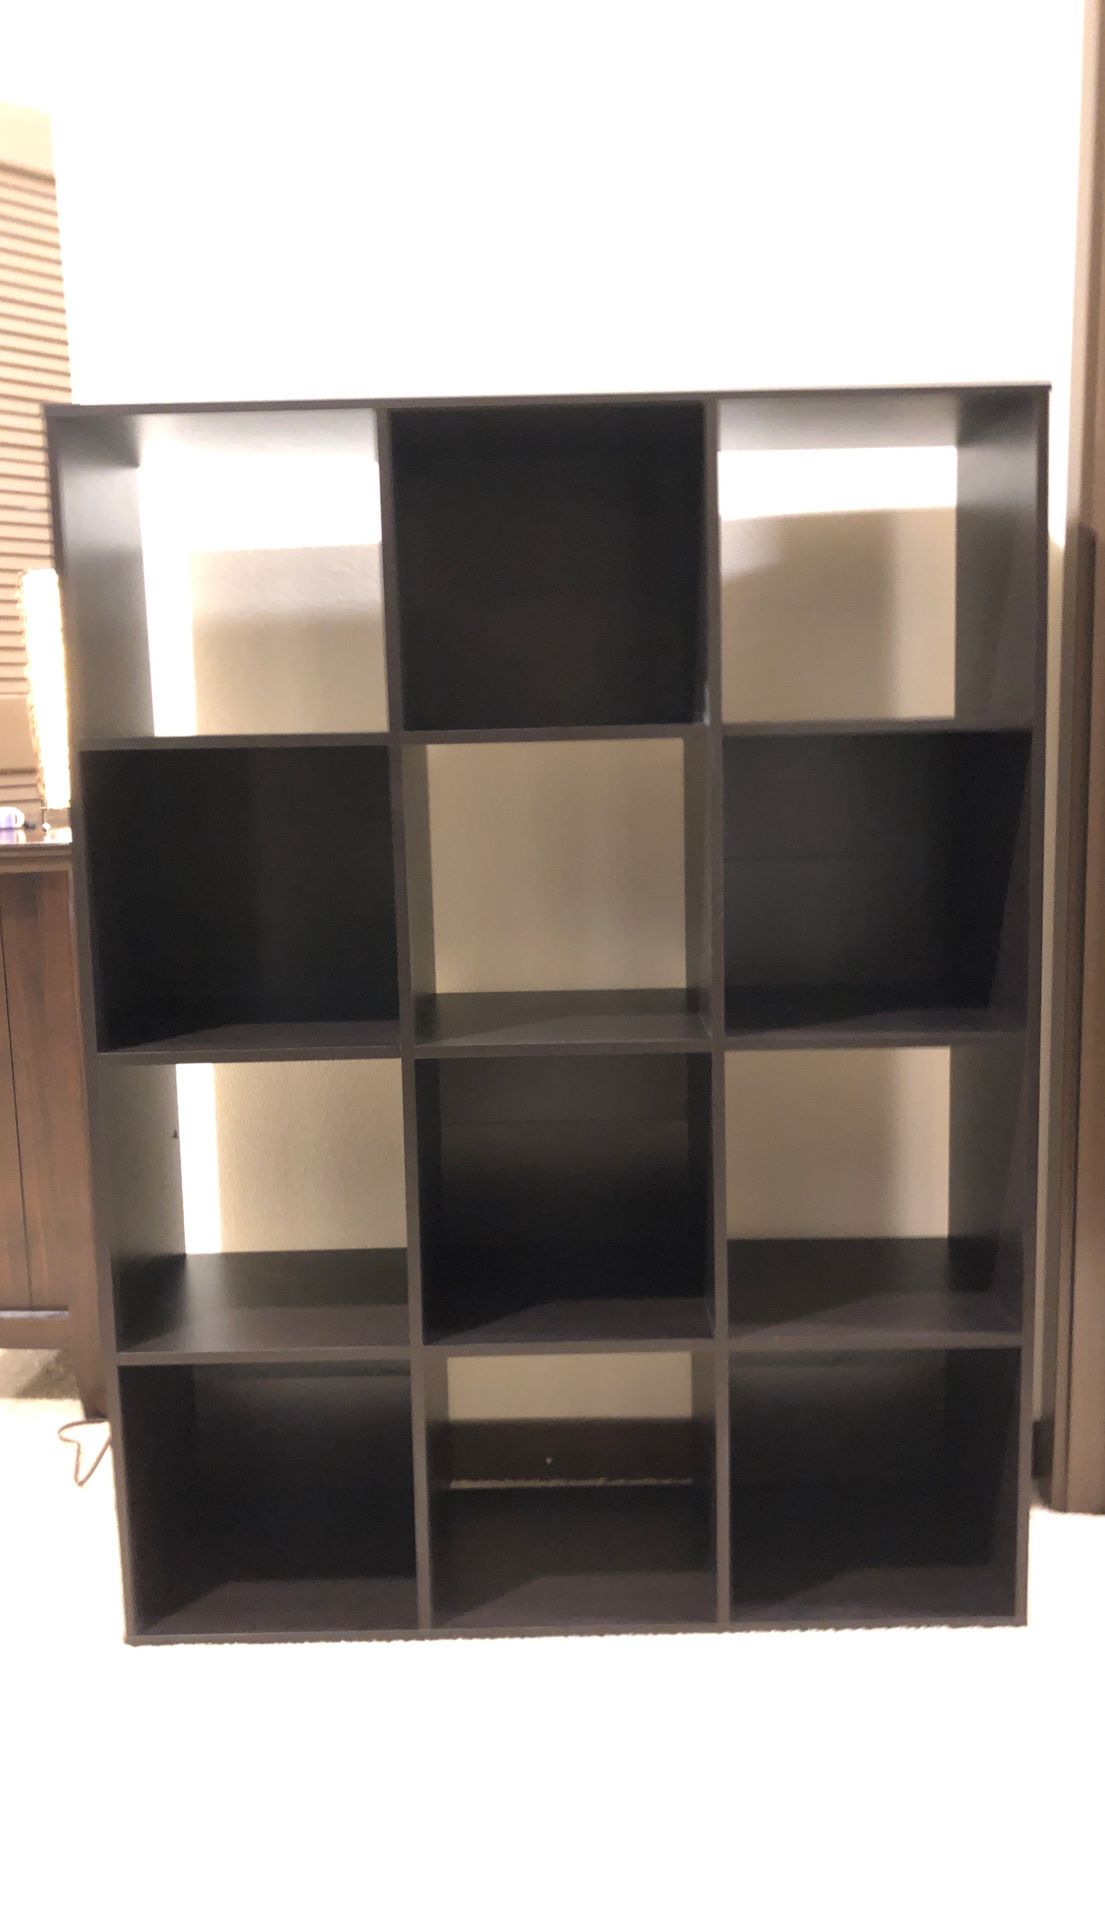 Storage cube shelves